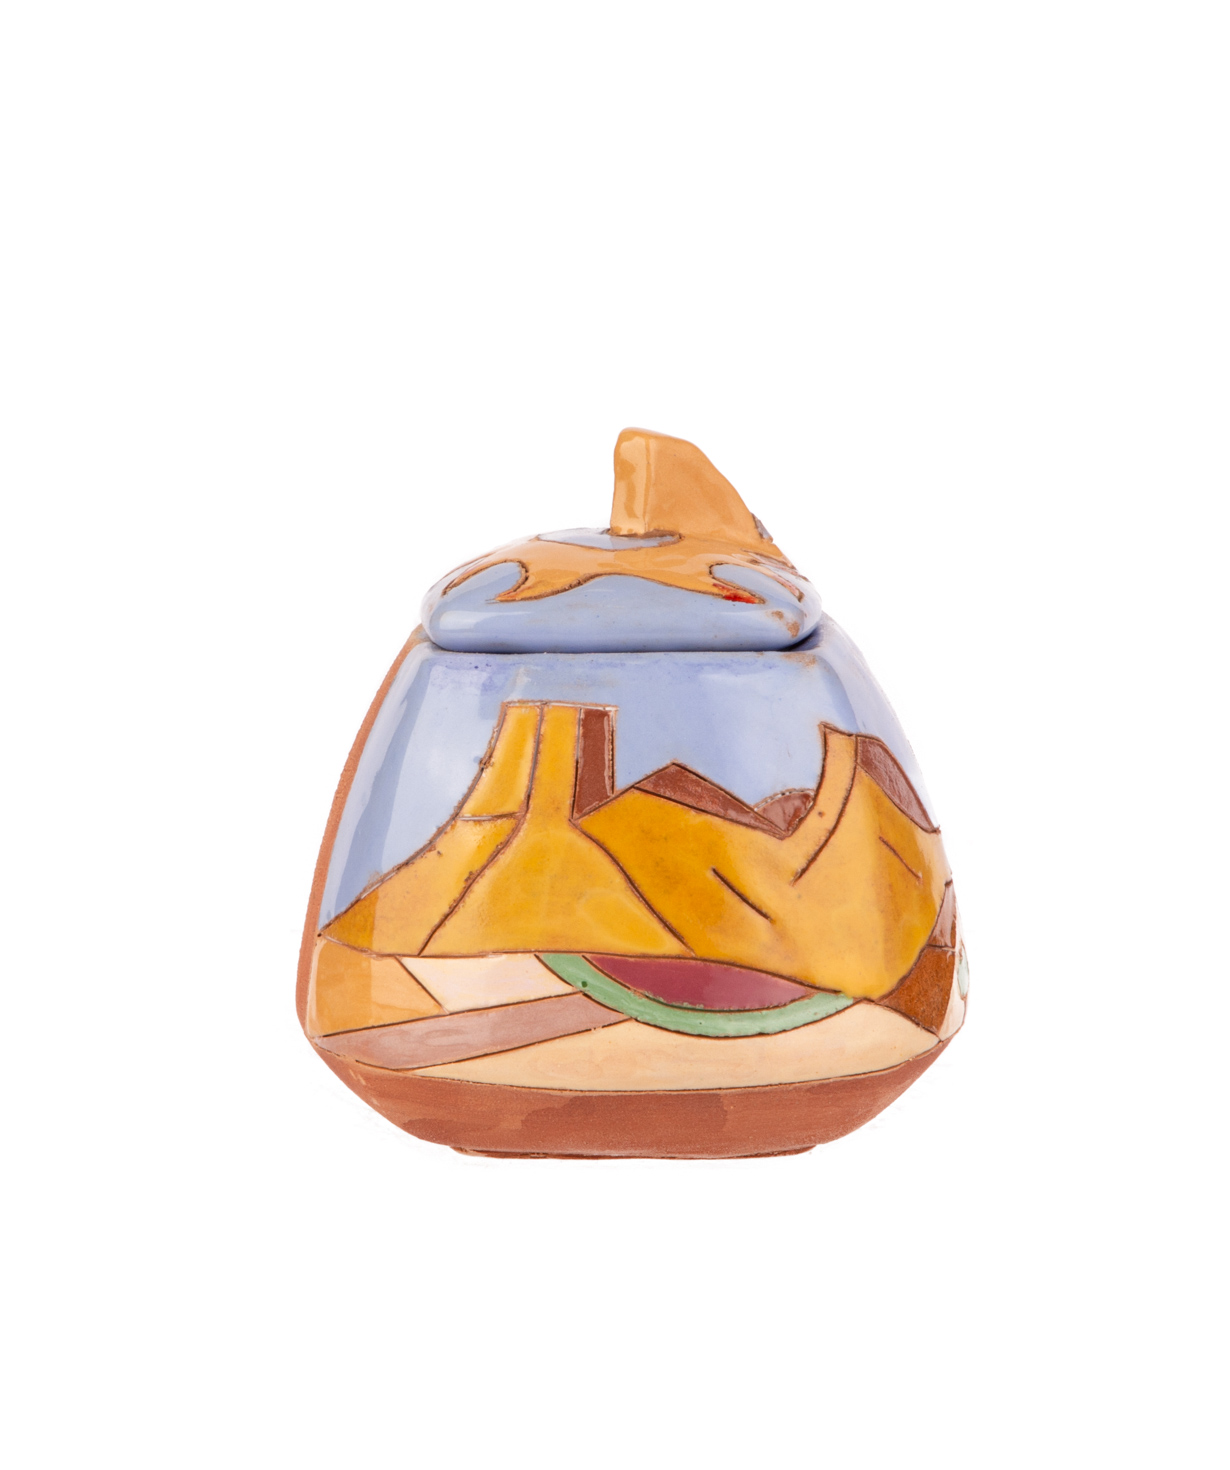 Sugar bowl `Nuard Ceramics` Saryan